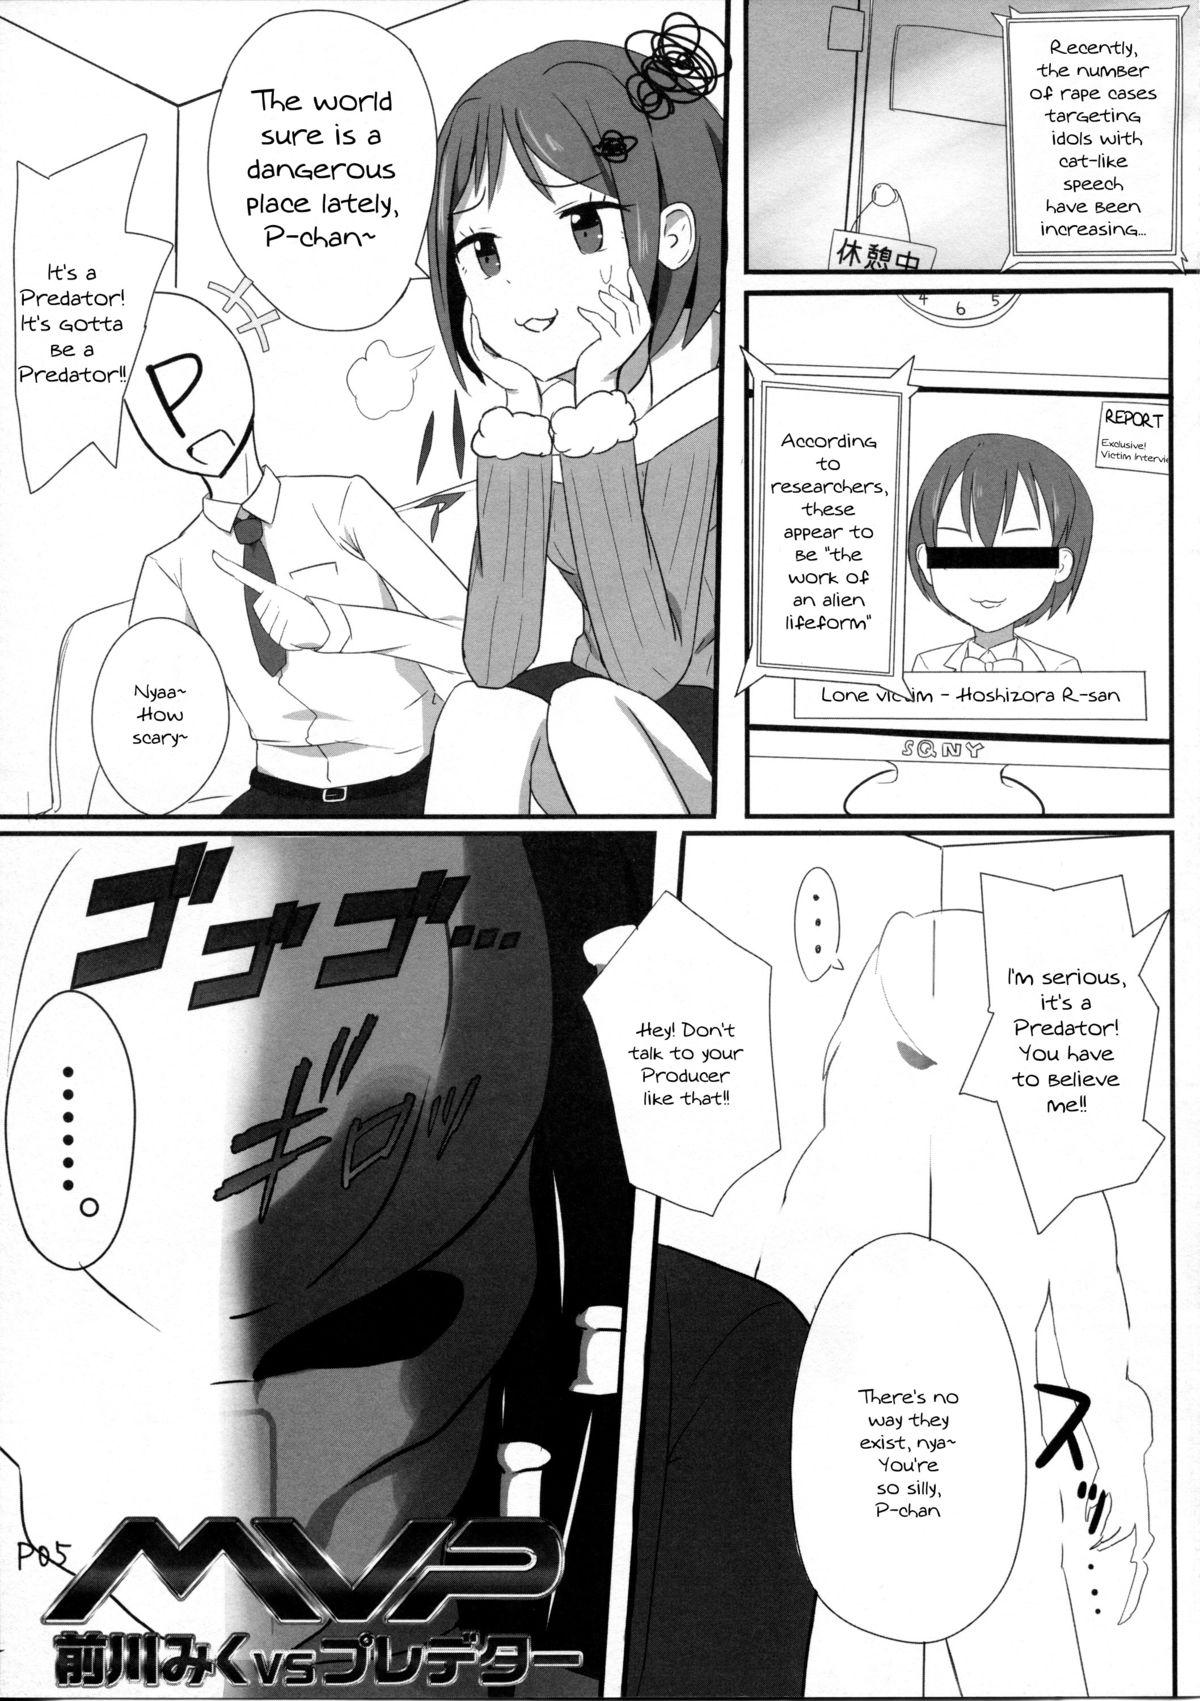 Tall Maekawa Miku vs Predator - The idolmaster Mama - Page 4